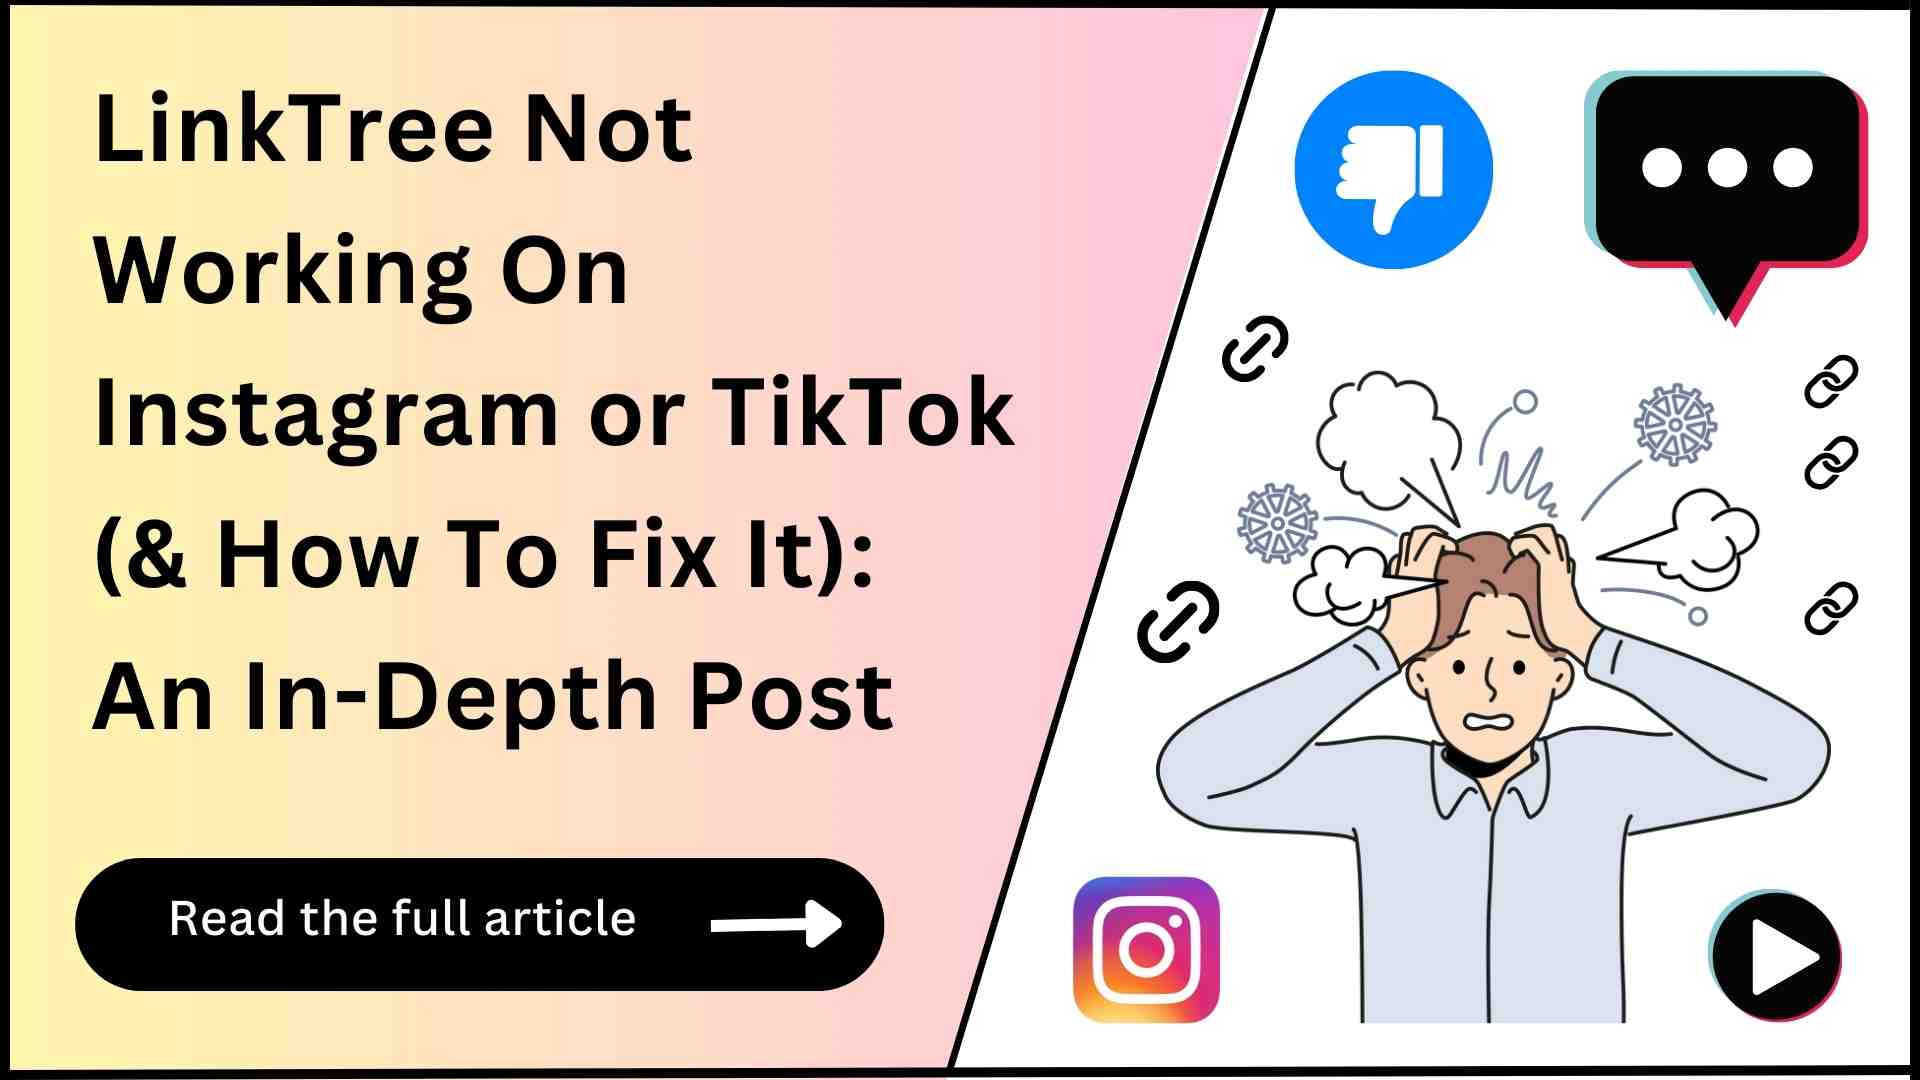 LinkTree Not Working On Instagram or TikTok (How To Fix It?)